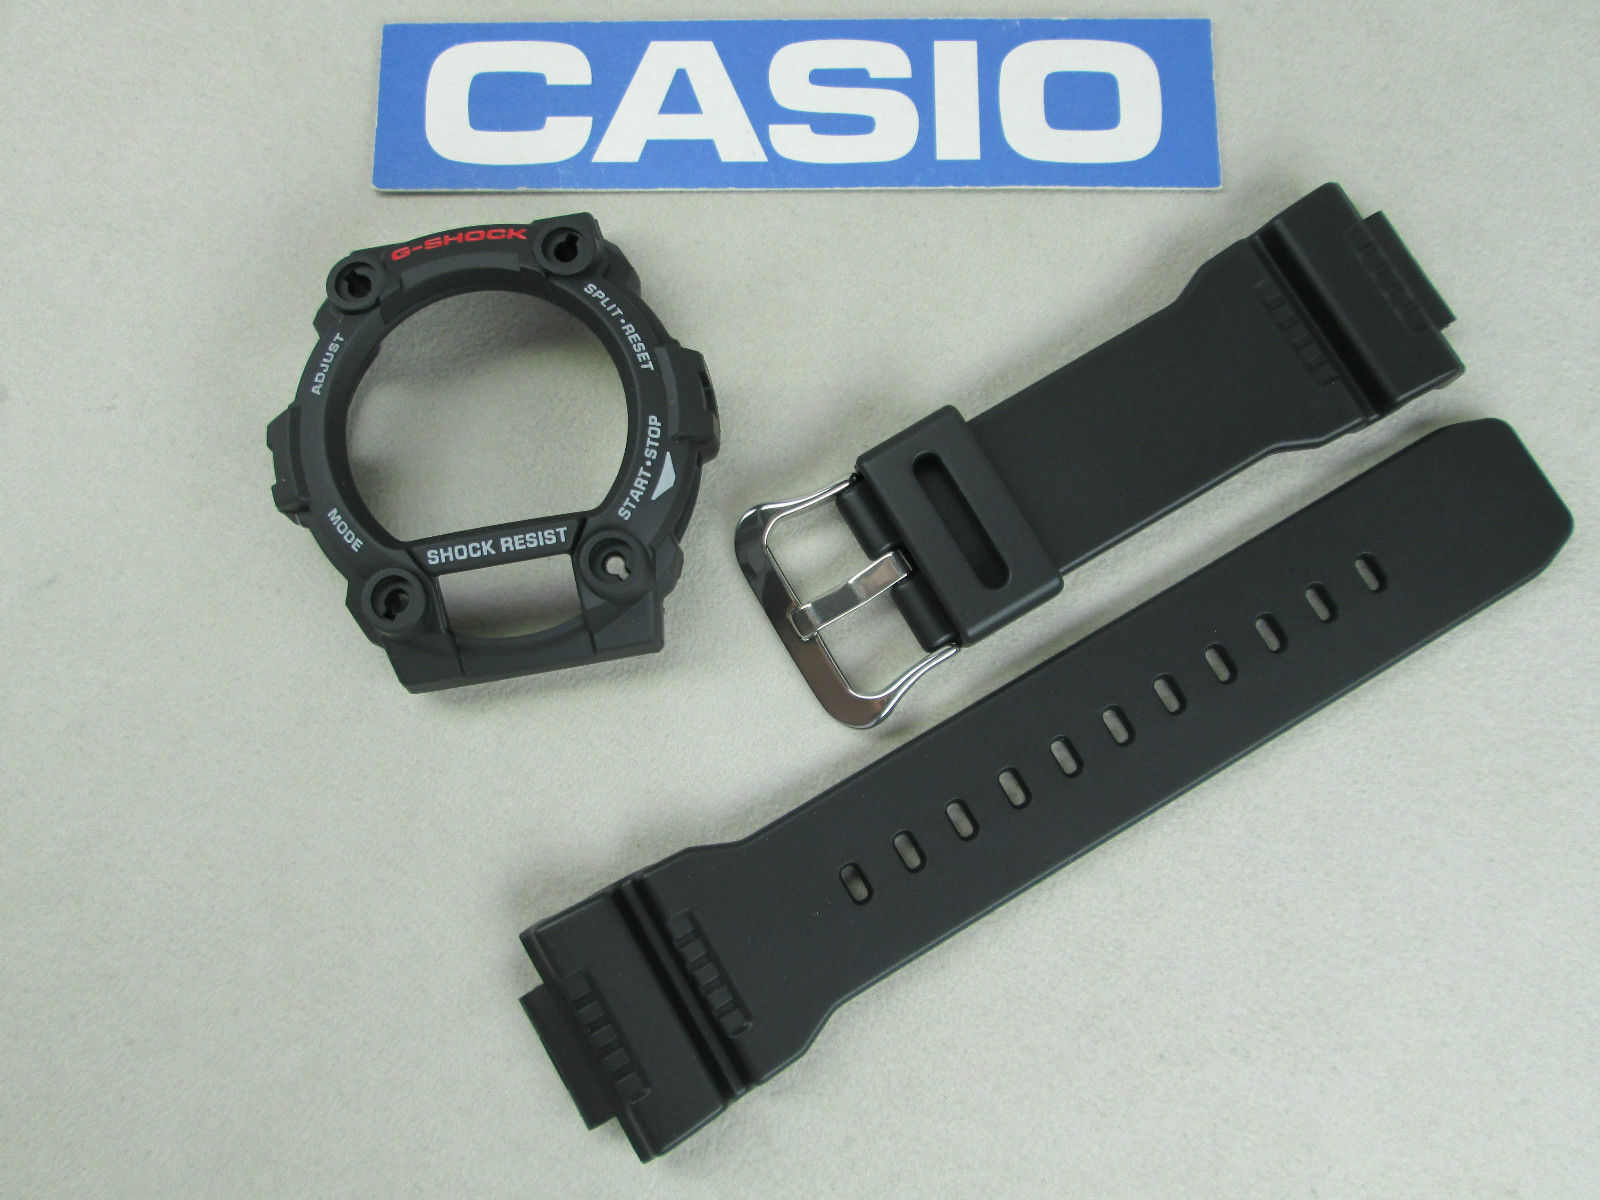 CASIO G-Shock GW-7900 Original G-Shock Black BAND & BEZEL Combo GW-7900B G-7900